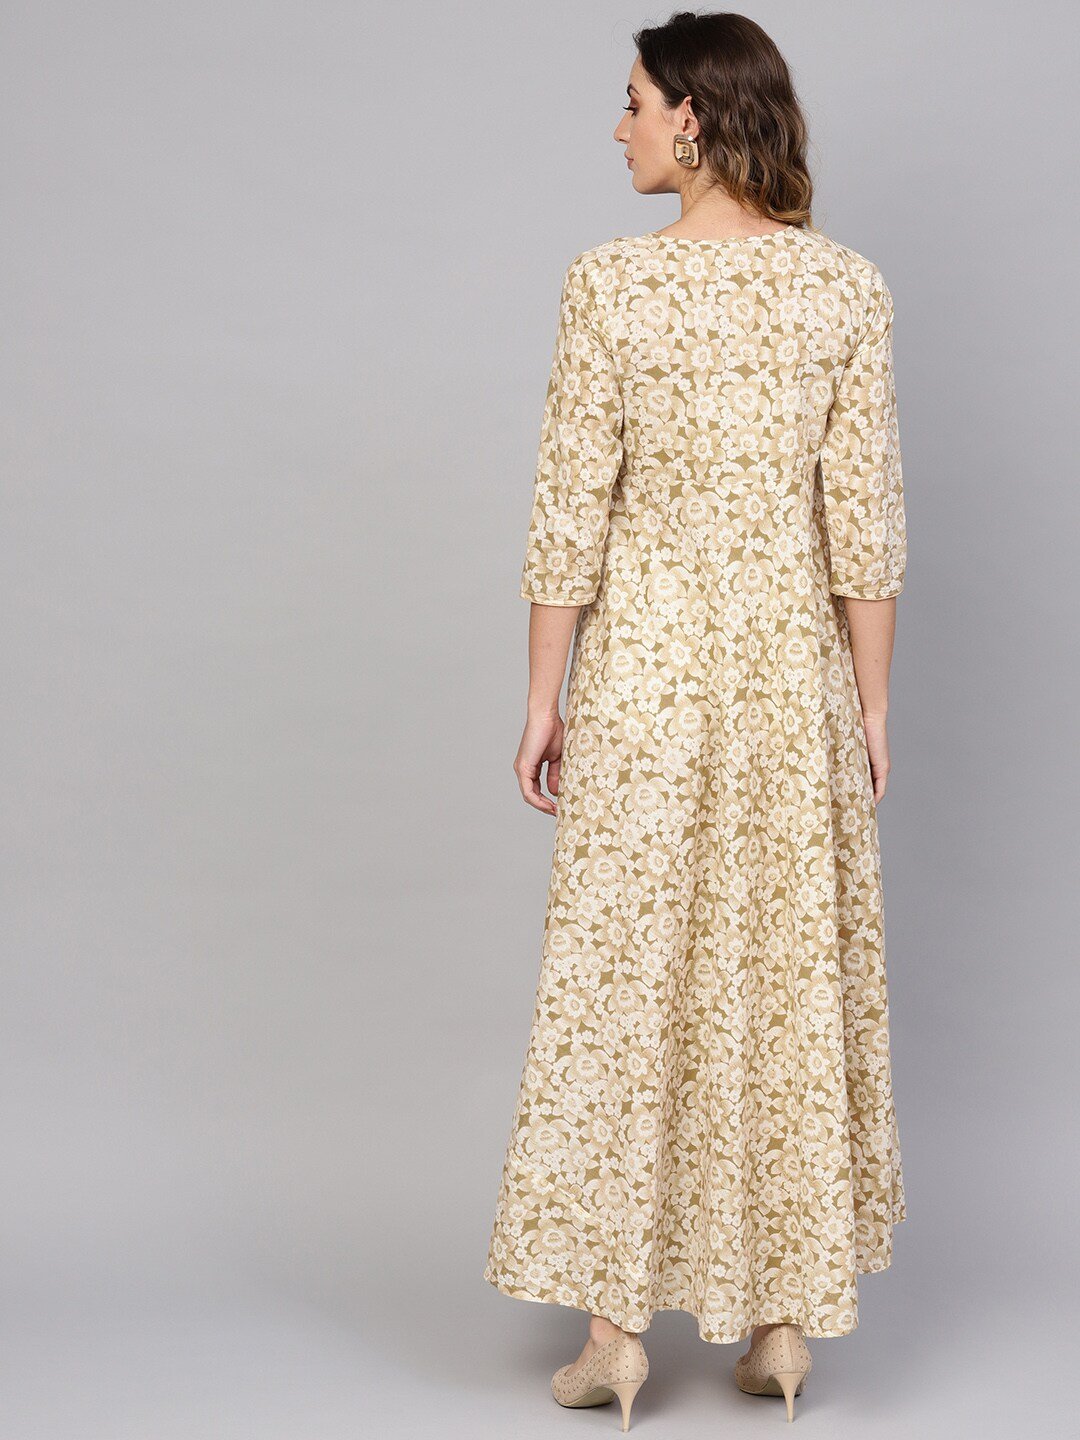 Women's  Off-White & Beige Floral Print Maxi Dress - AKS